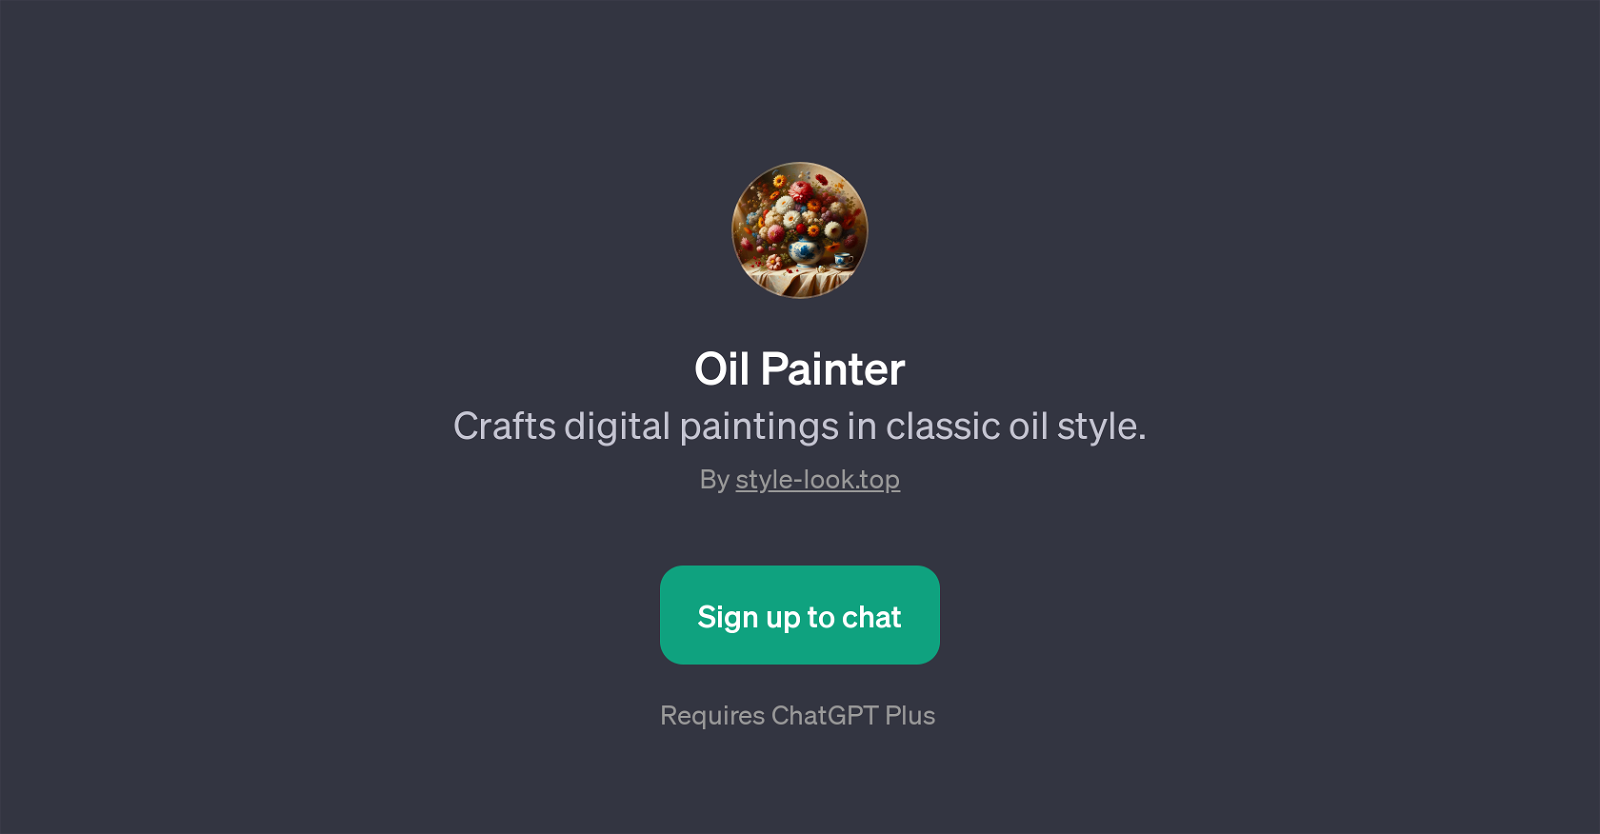 Oil Painter website